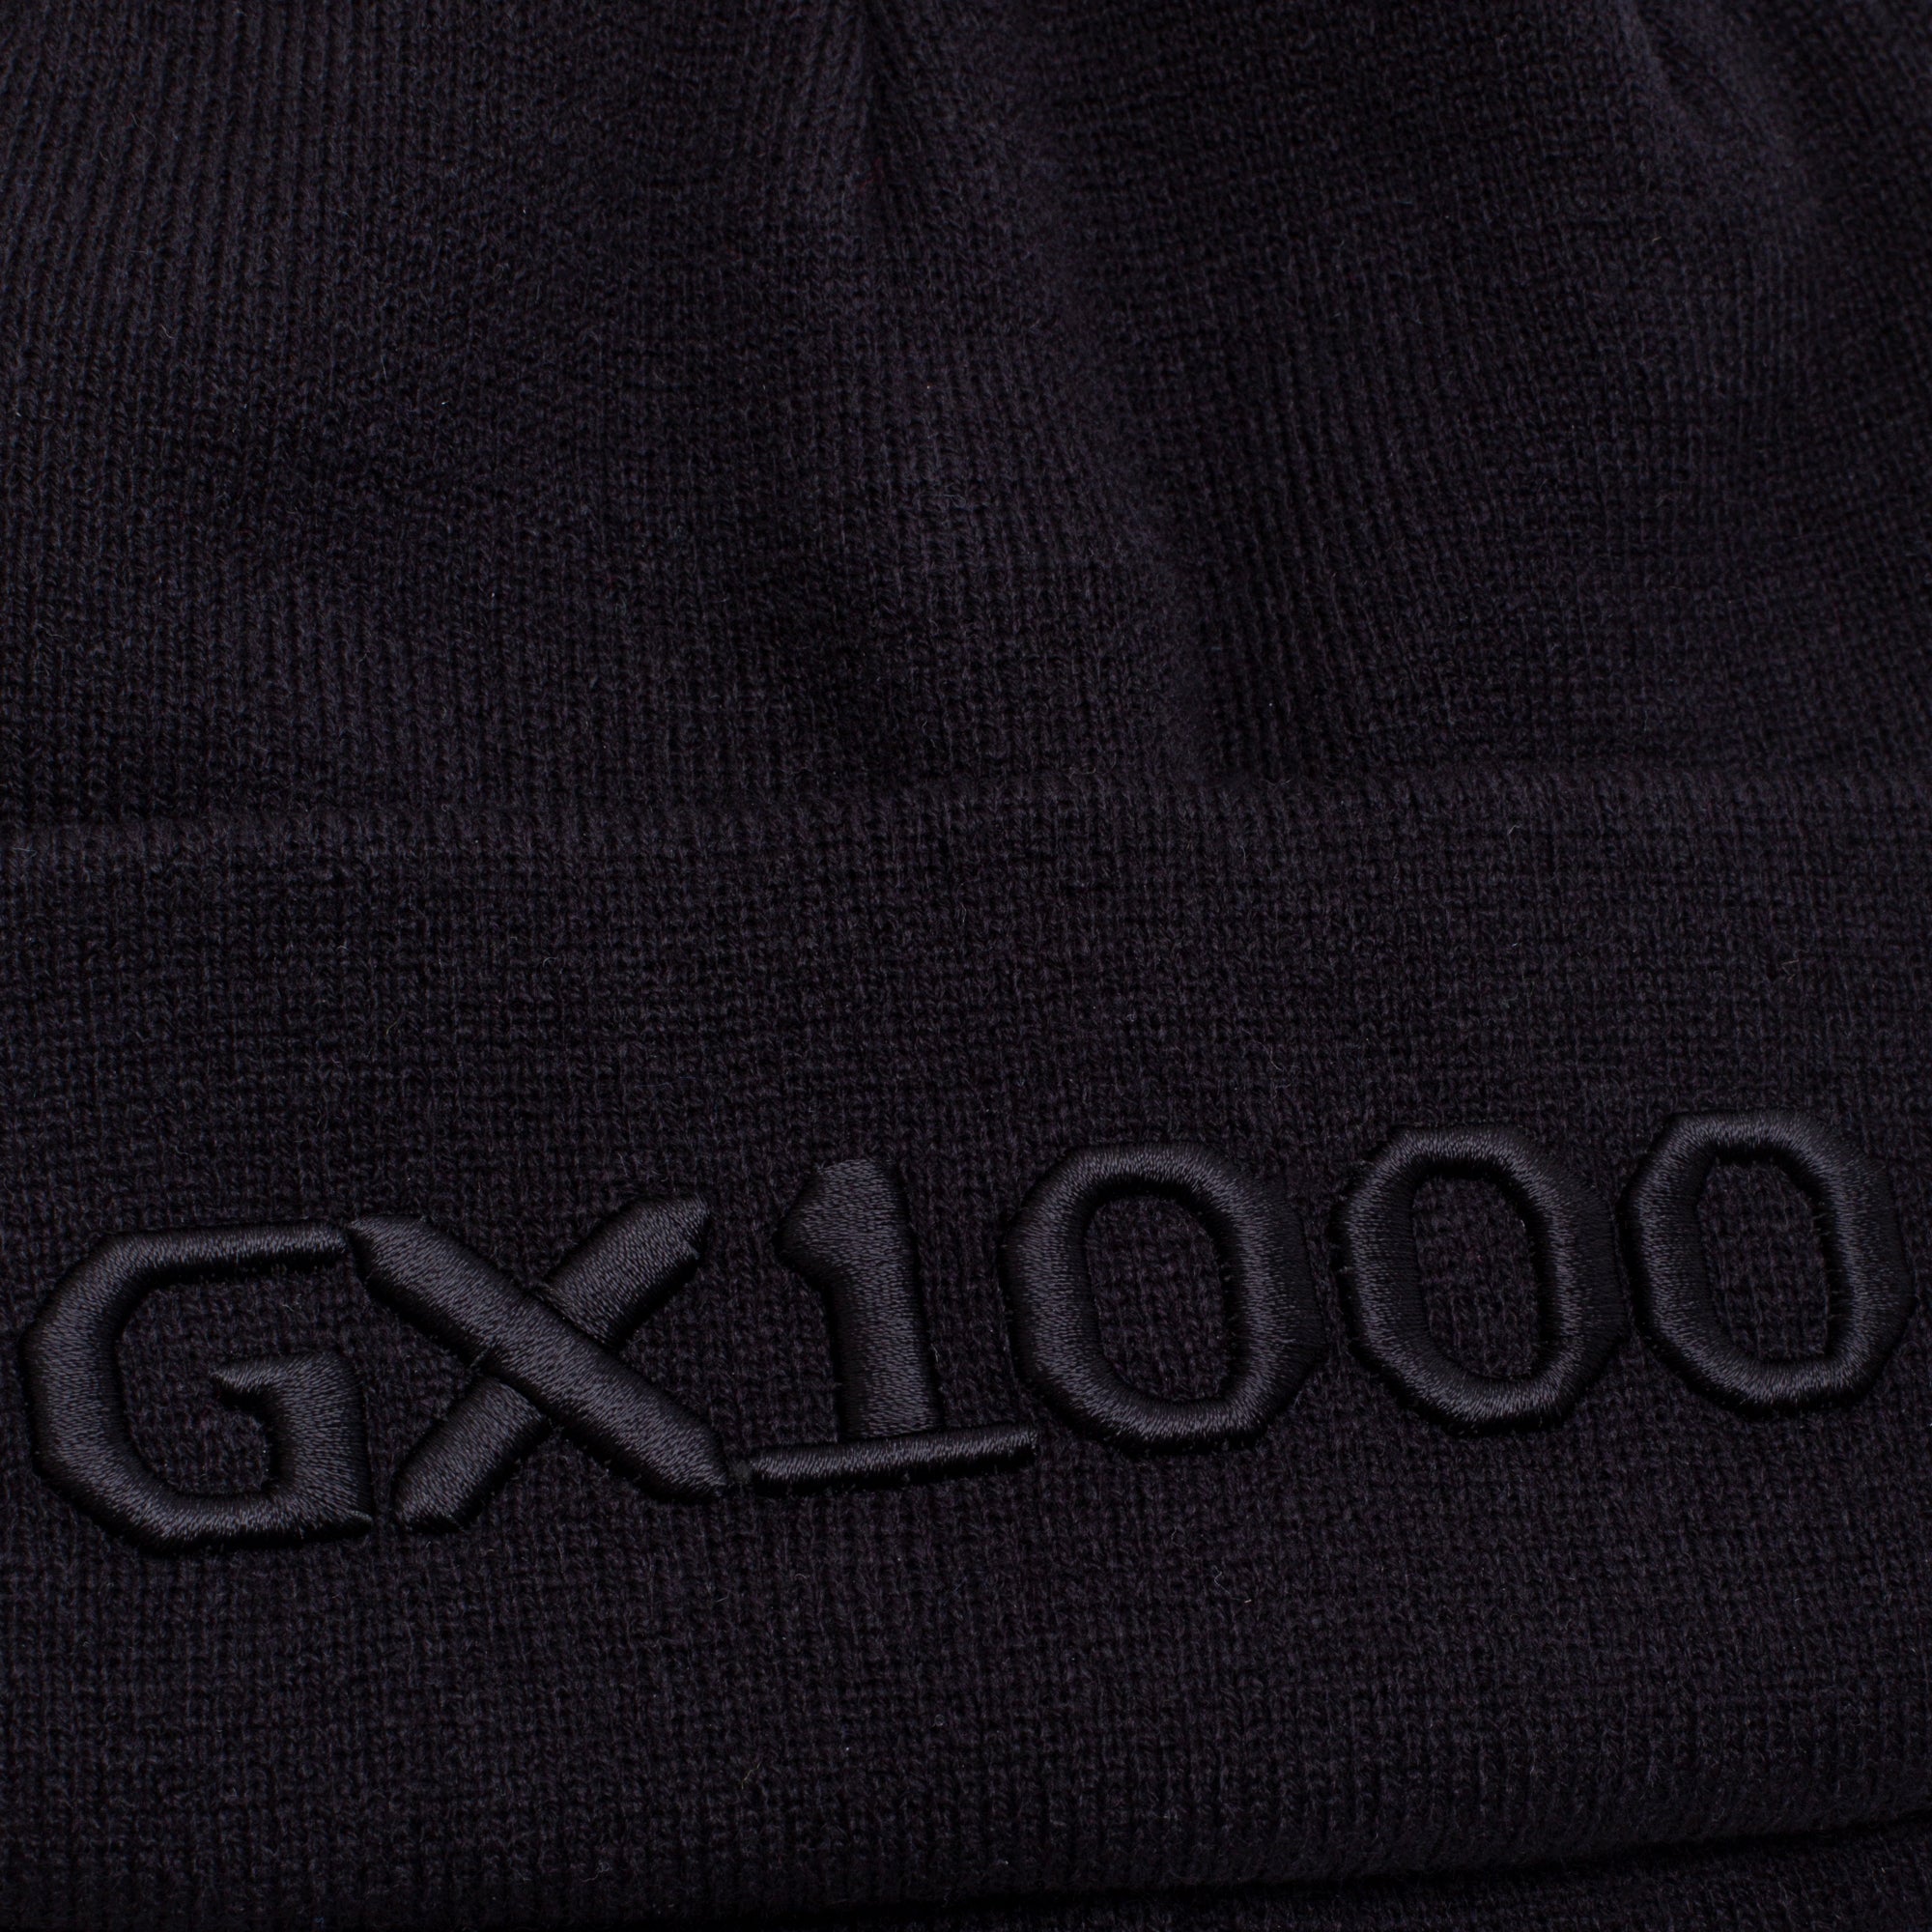 GX1000 - OG Logo Beanie "Black/Black"